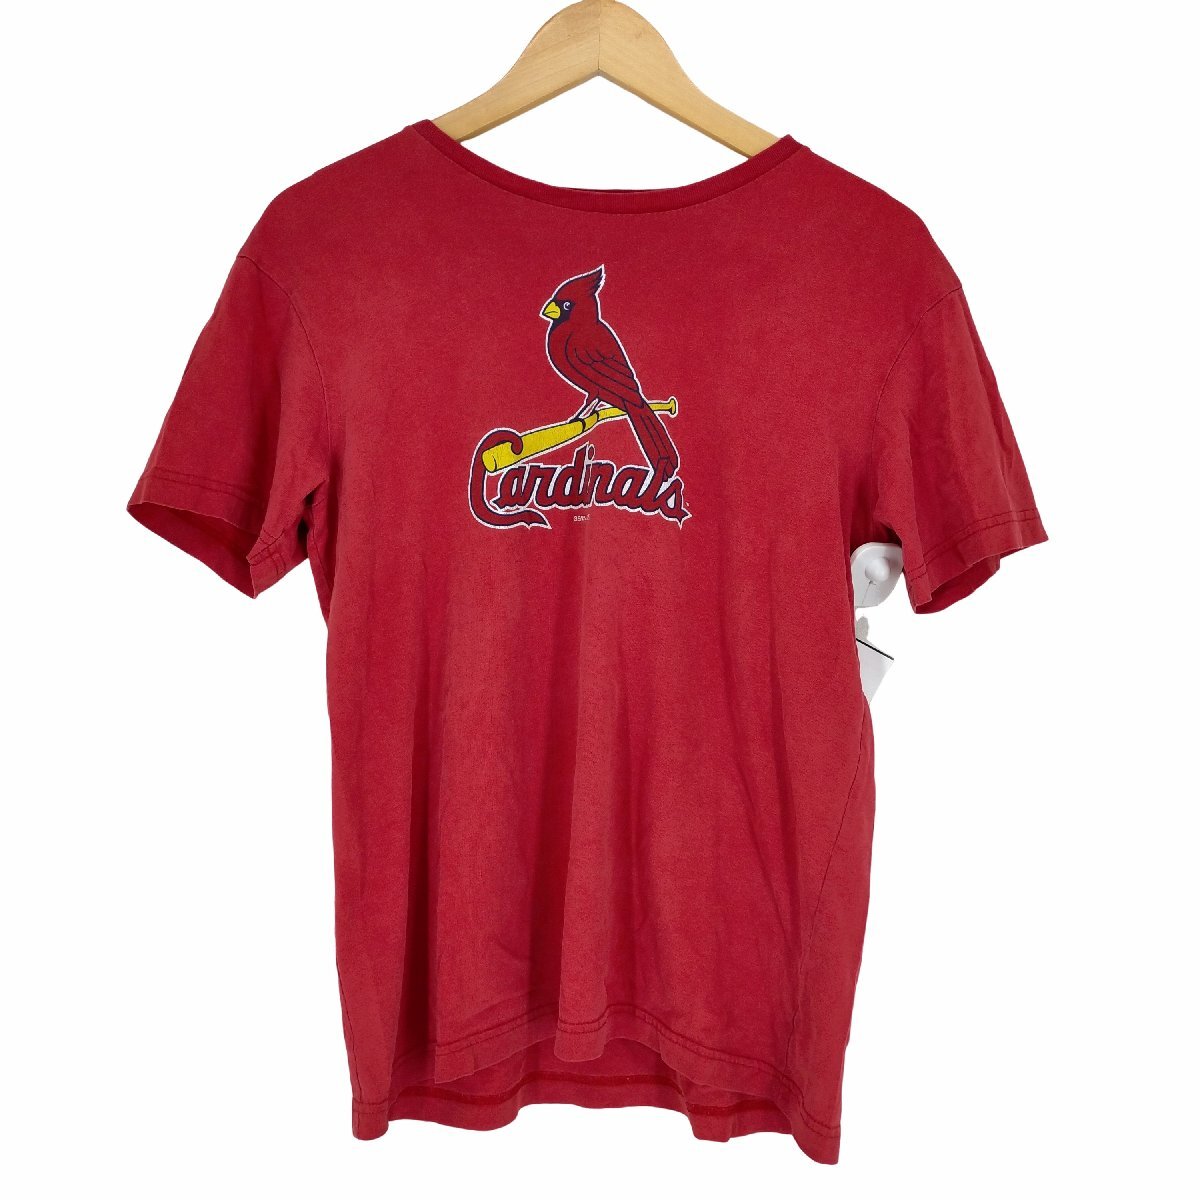 USED古着(ユーズドフルギ) cardinals フロントプリントクルーネックTシャツ メンズ 表記無 中古 古着 0625_画像1